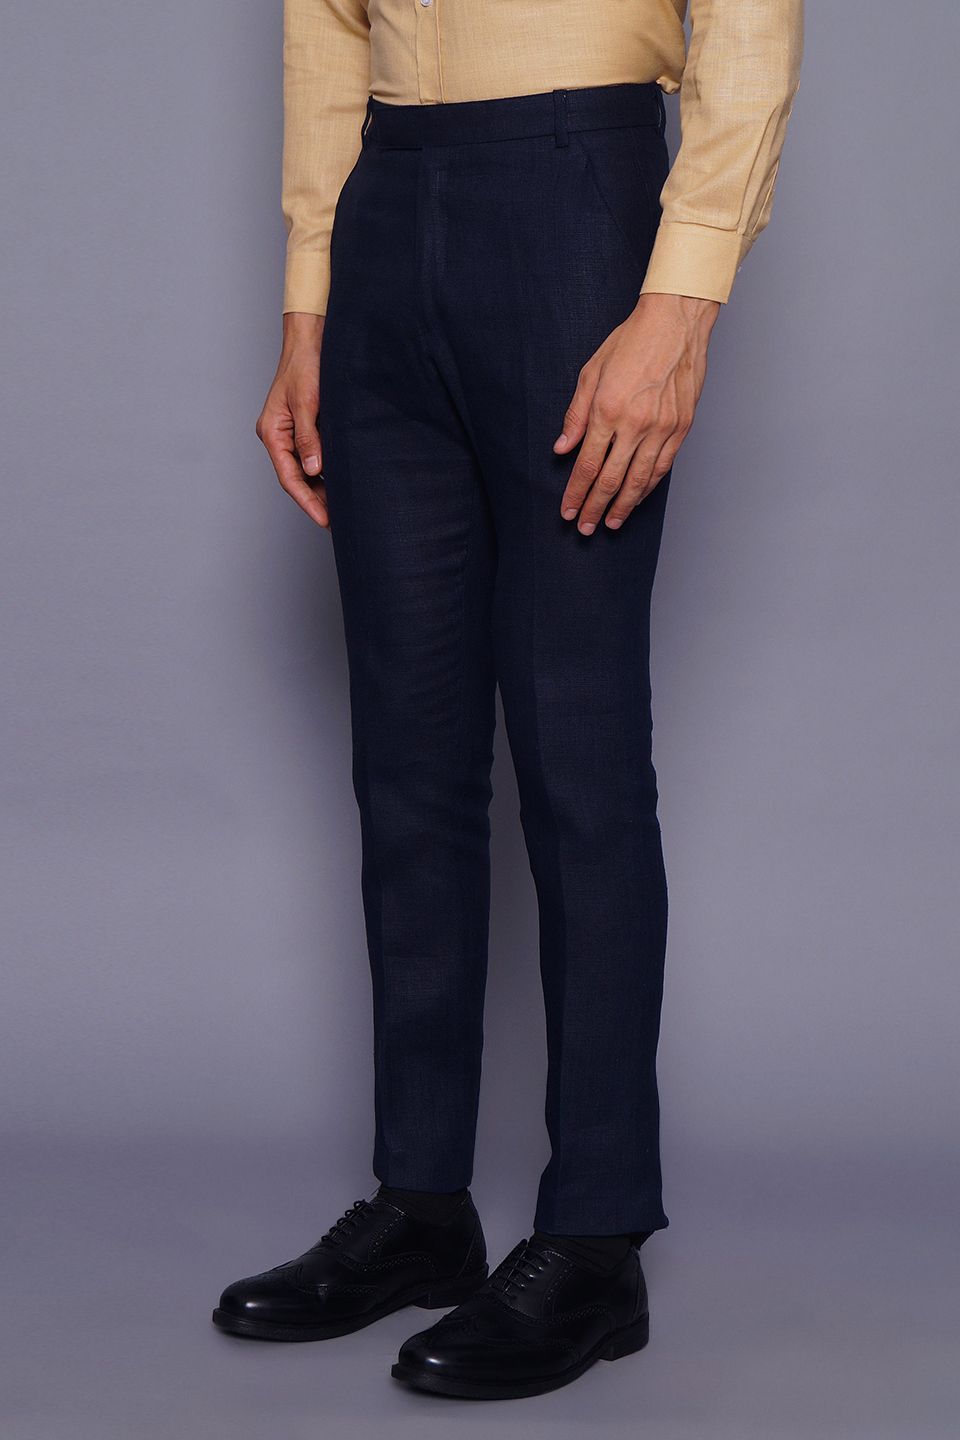 Wintage Men's Blue Regular Fit Pant 100% Linen 